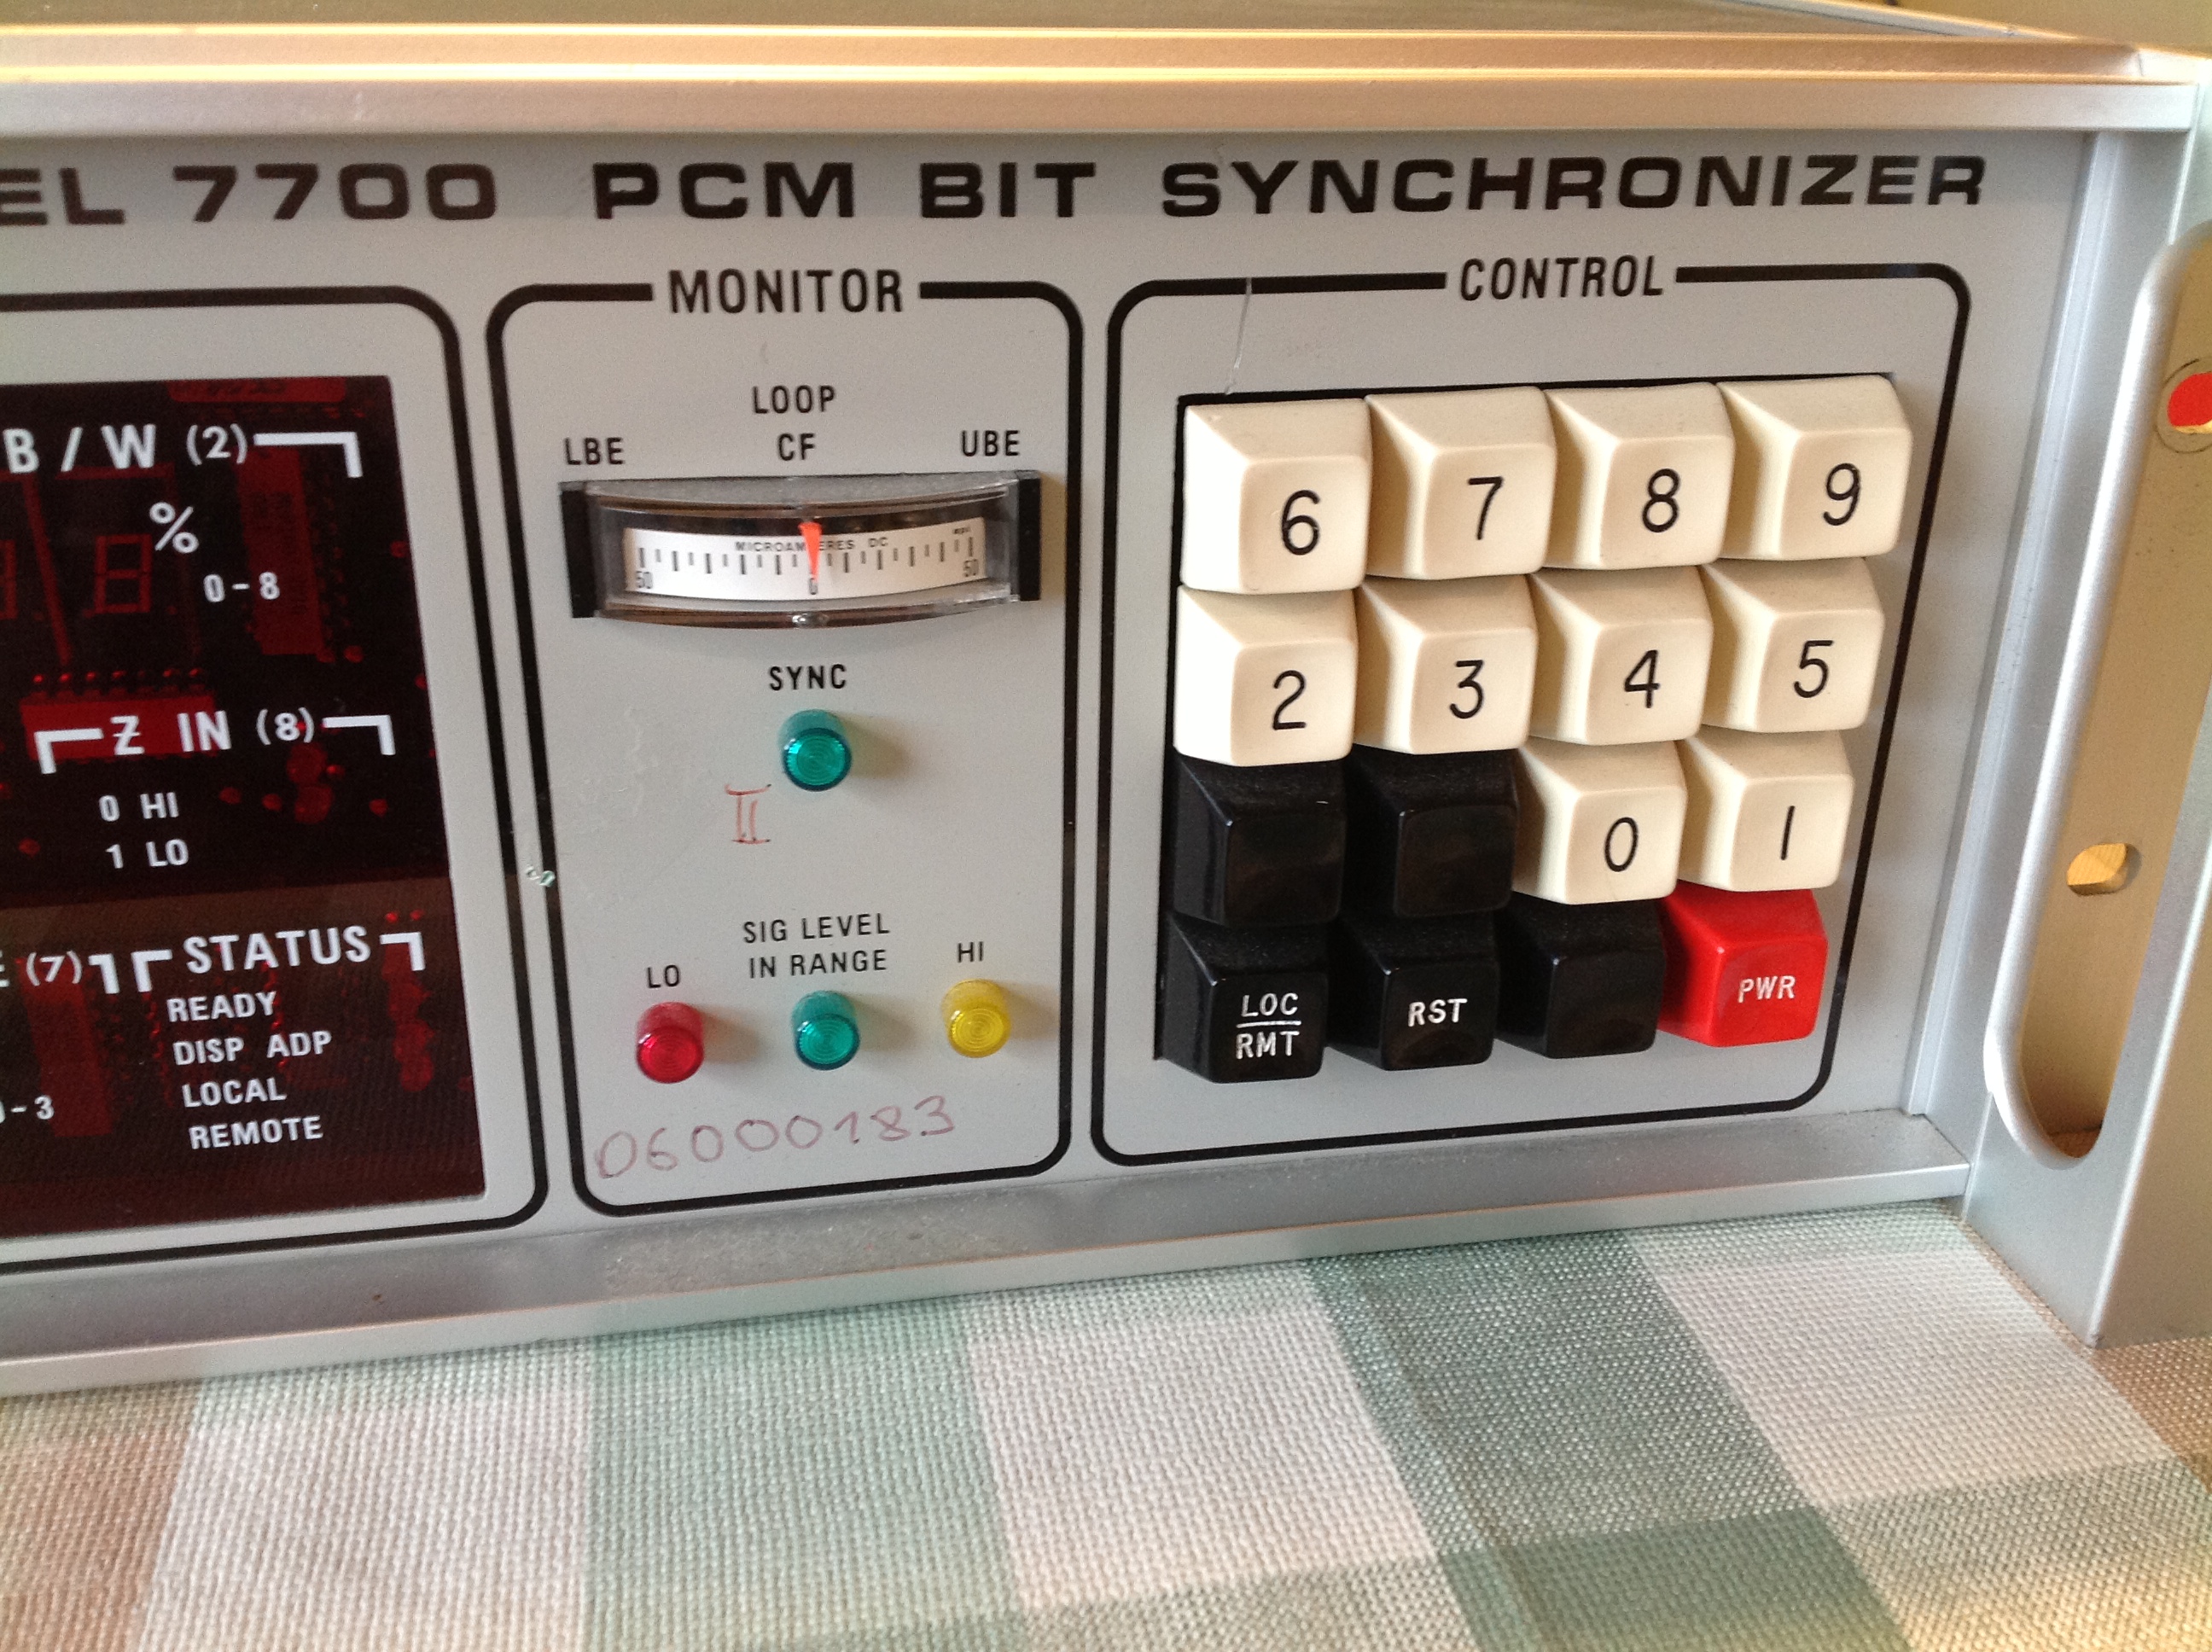 DSI Decon Systems Inc. Mod. 7700 PCM BIT Synchronizer